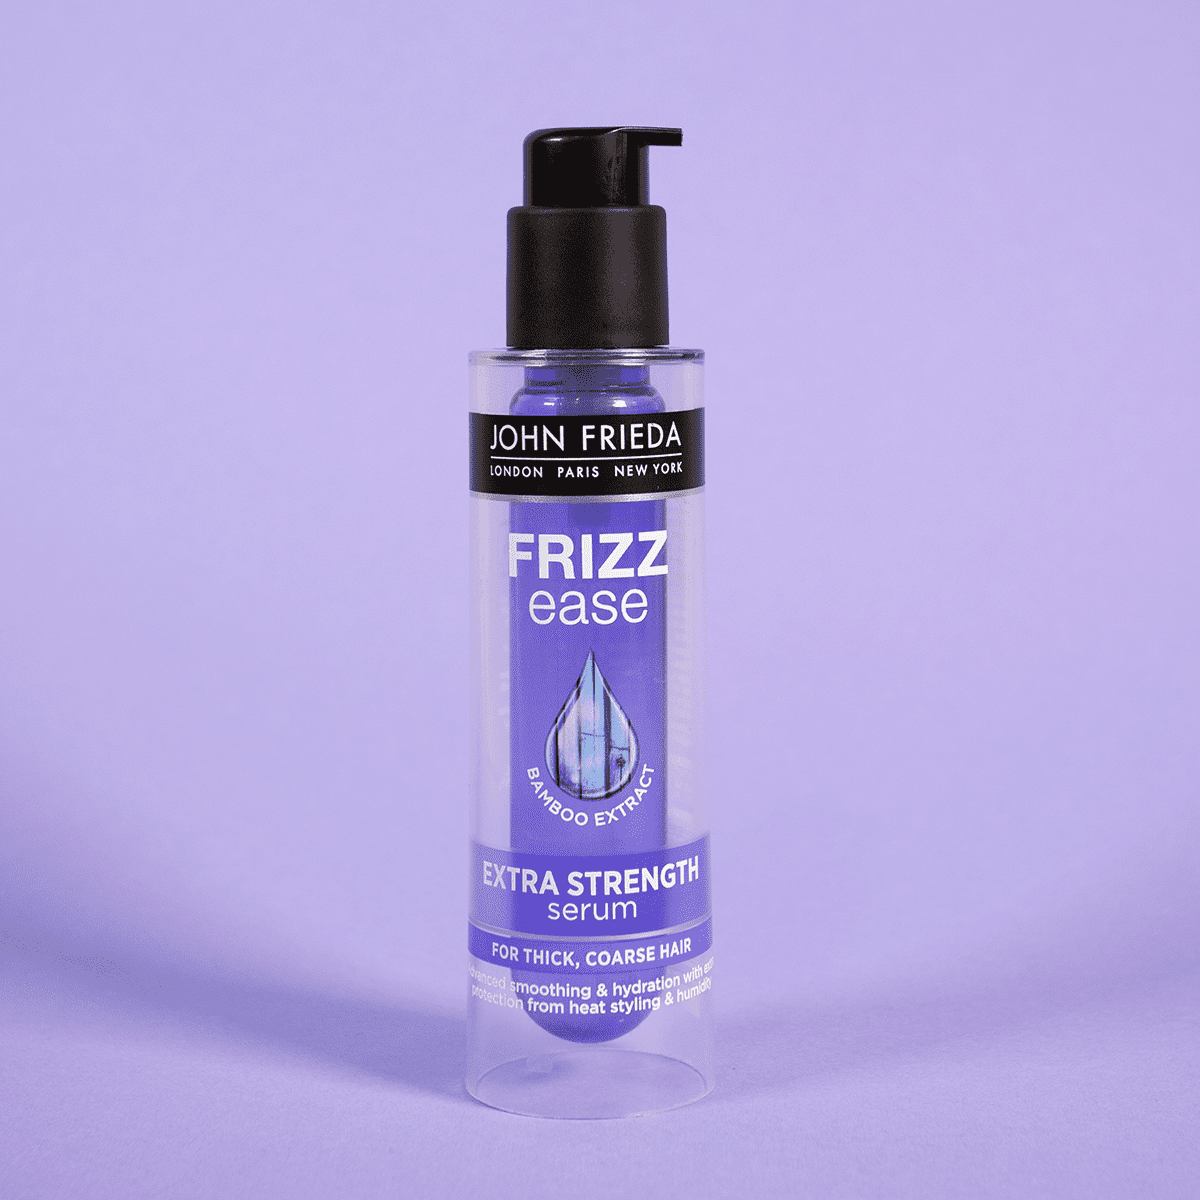 John Frieda Frizz Ease Extra Strength Serum for extra frizzy hair